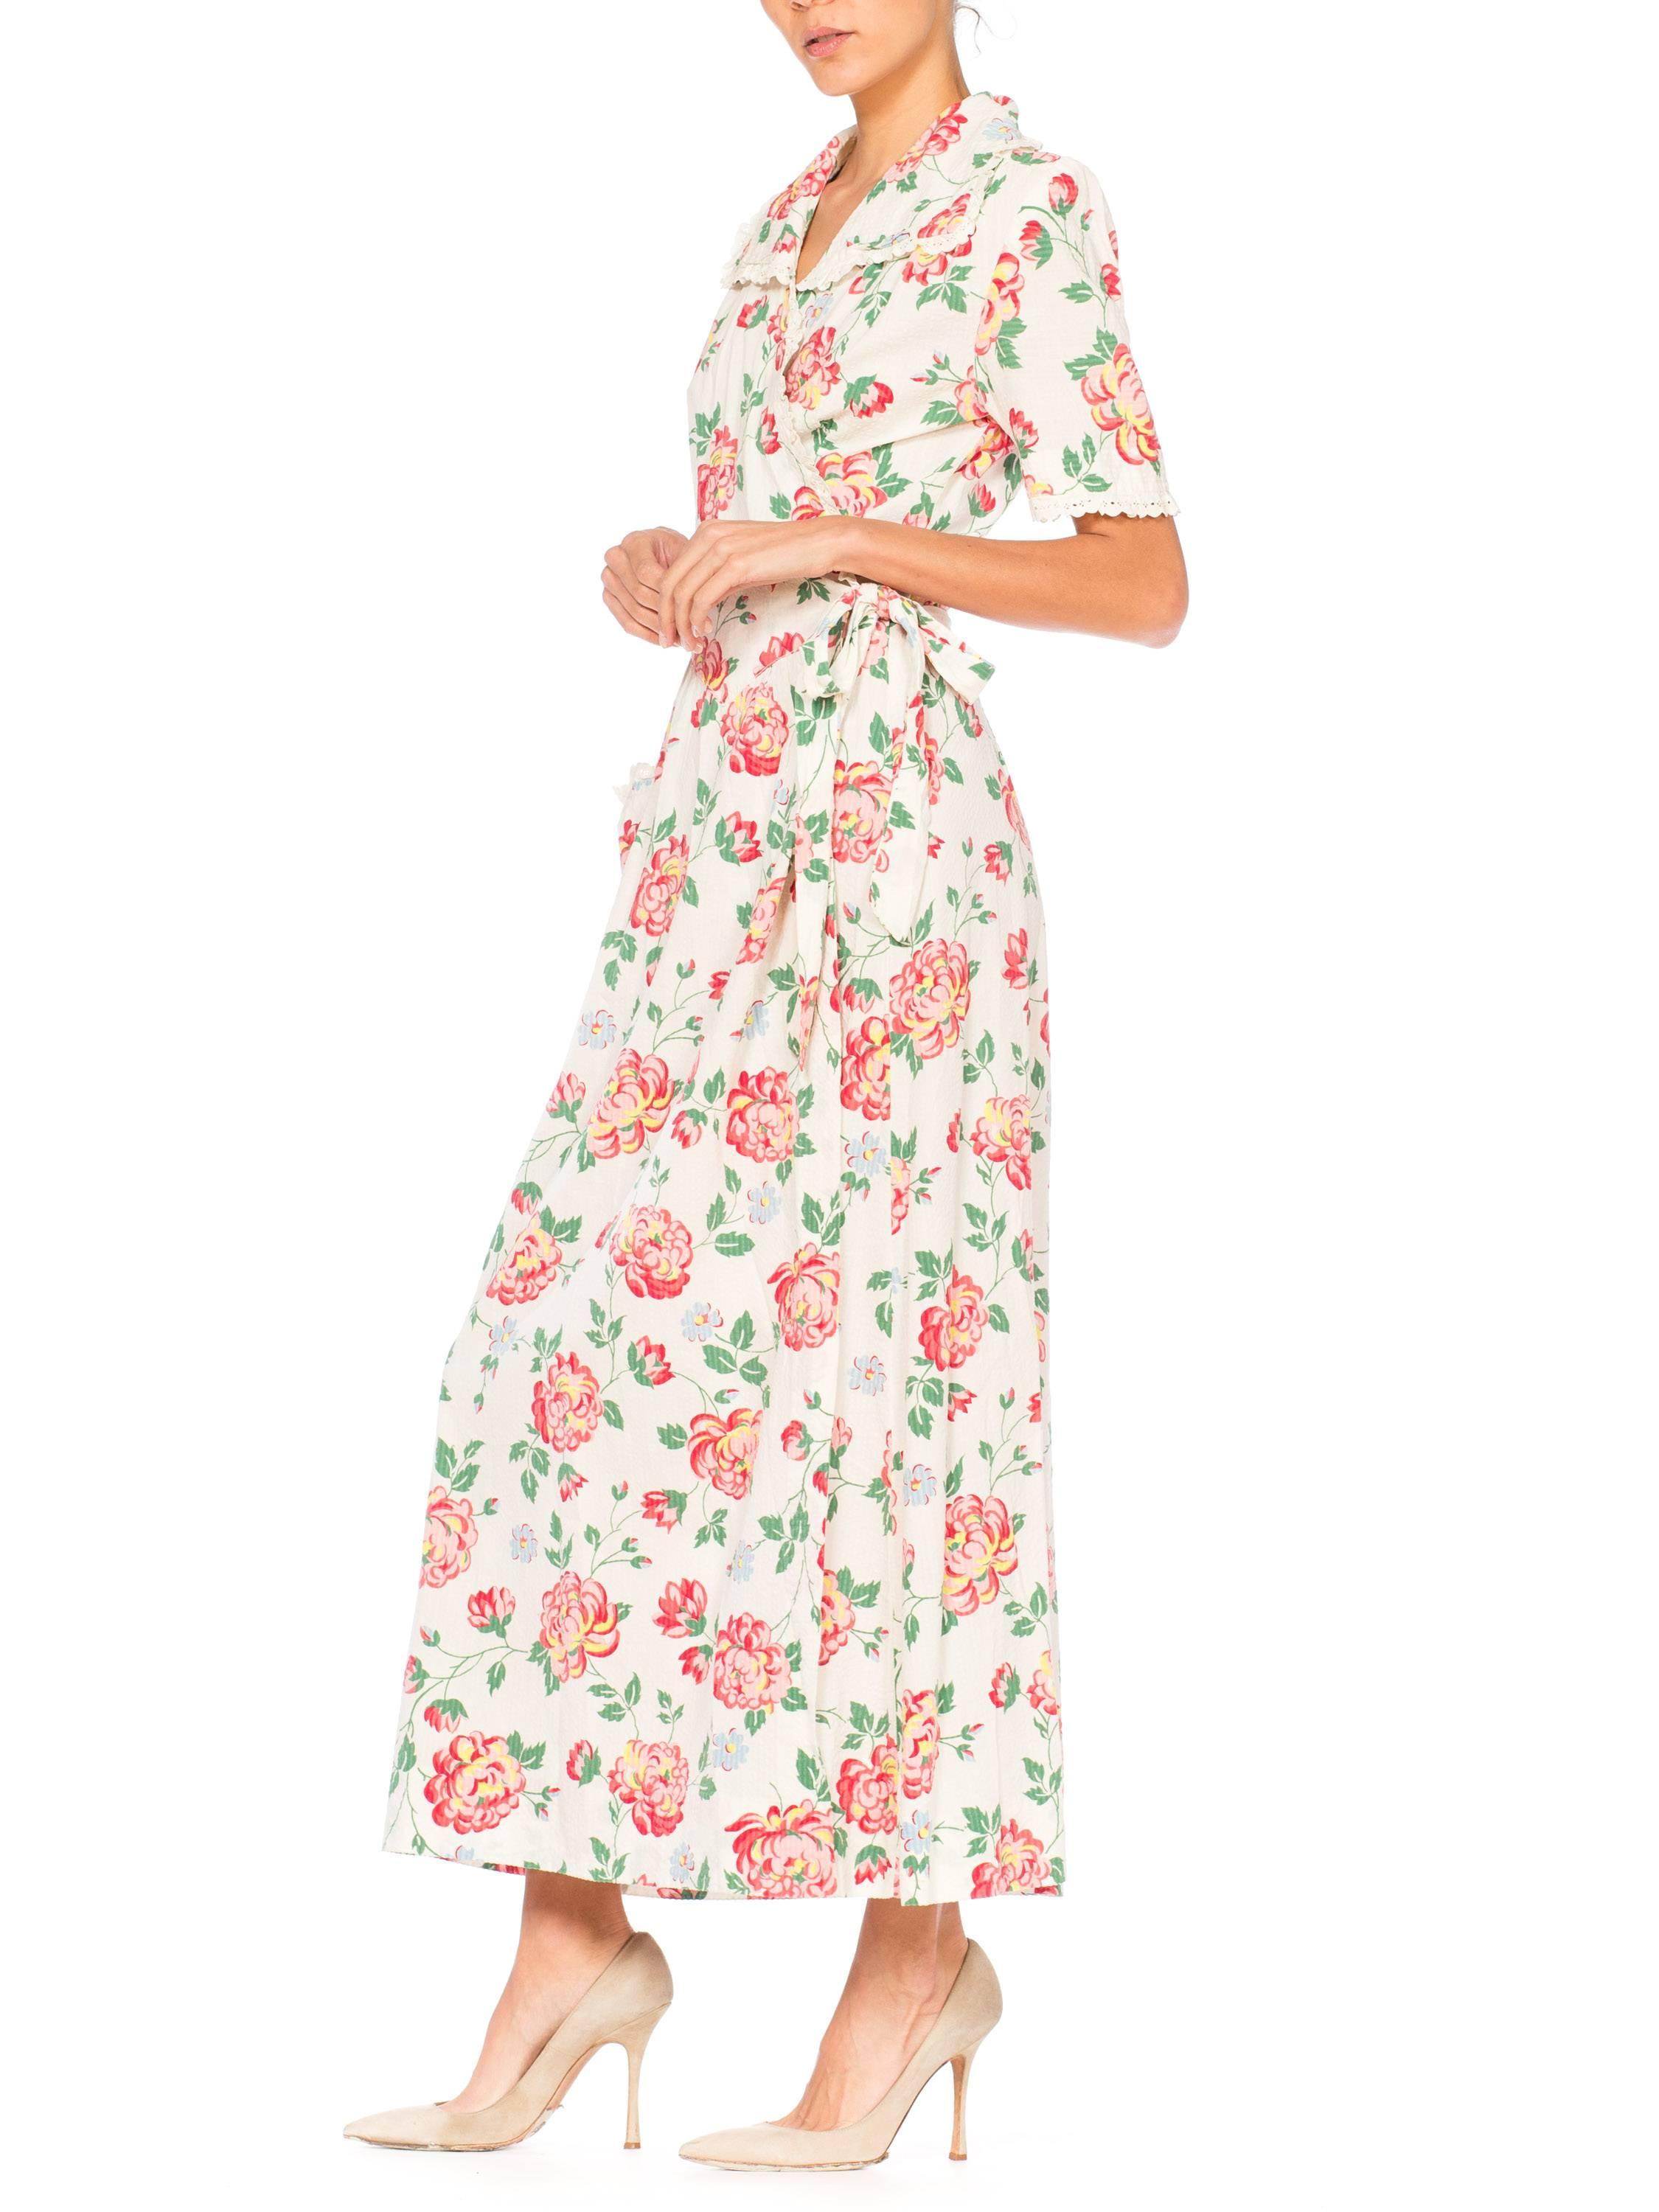 Women's Floral Printed Cotton Dress, 1940s 